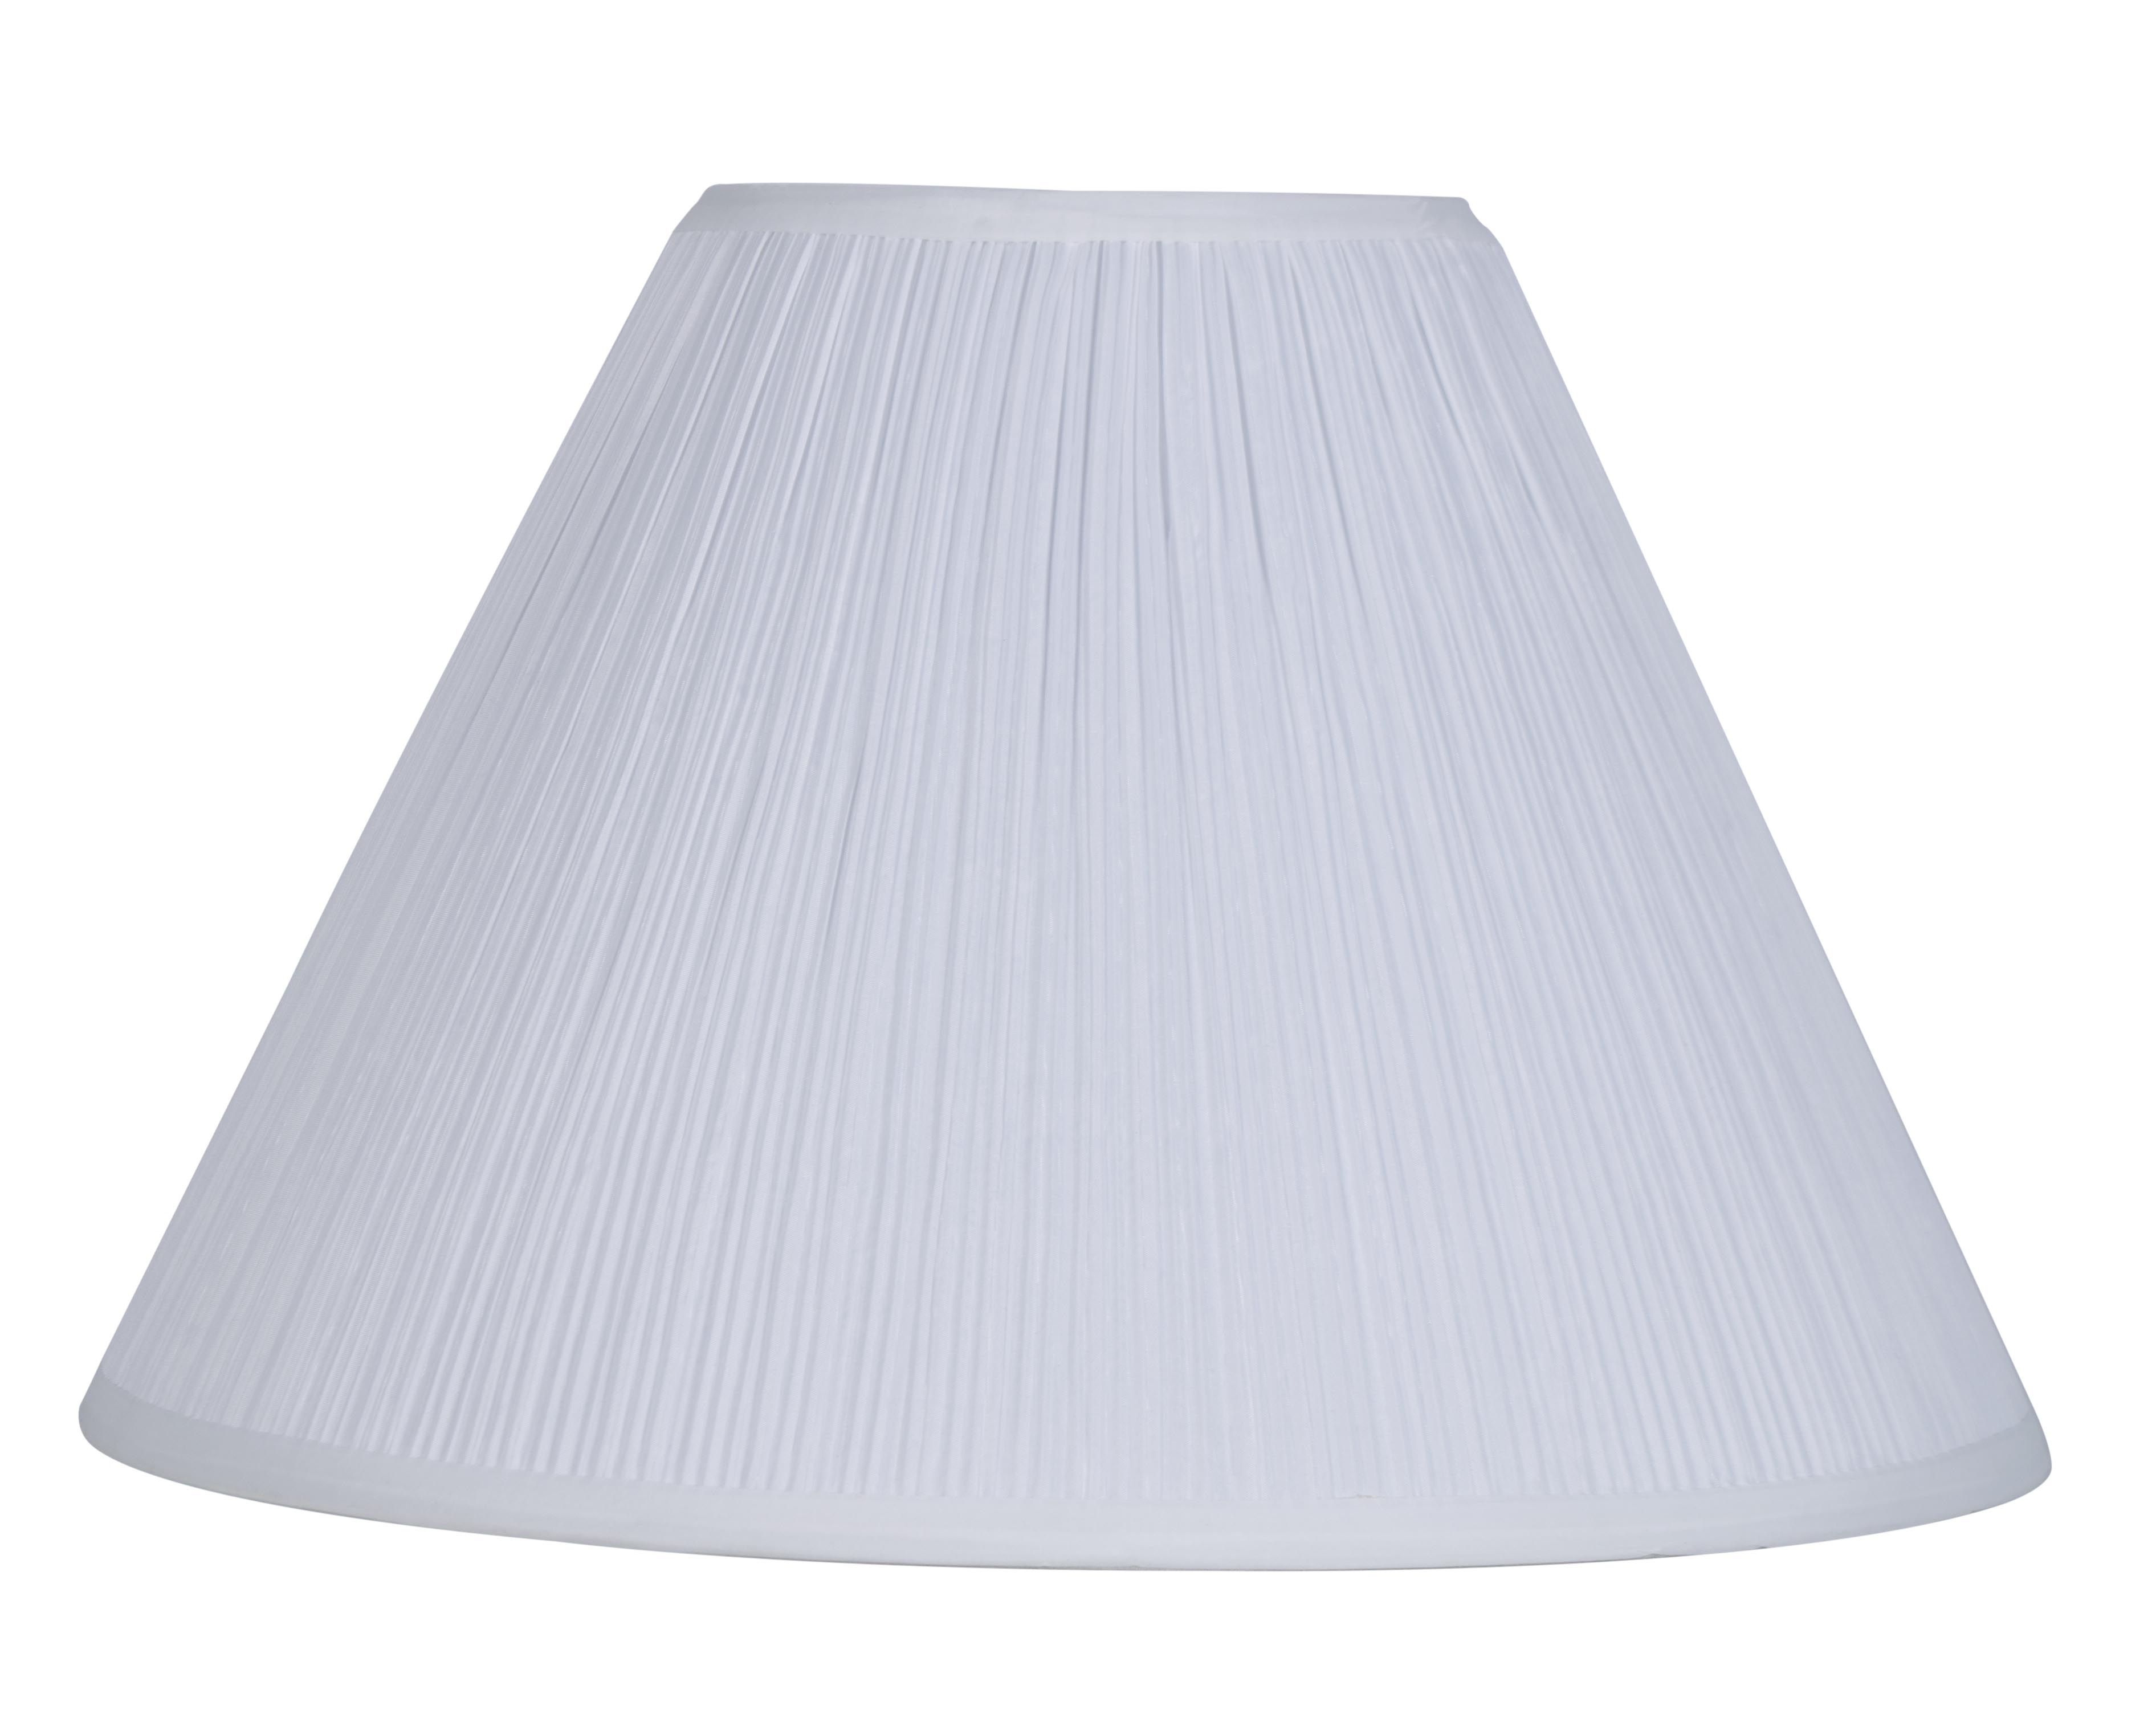 Mainstays 18" Soft Pleat Empire Lamp Shade, White - image 2 of 8